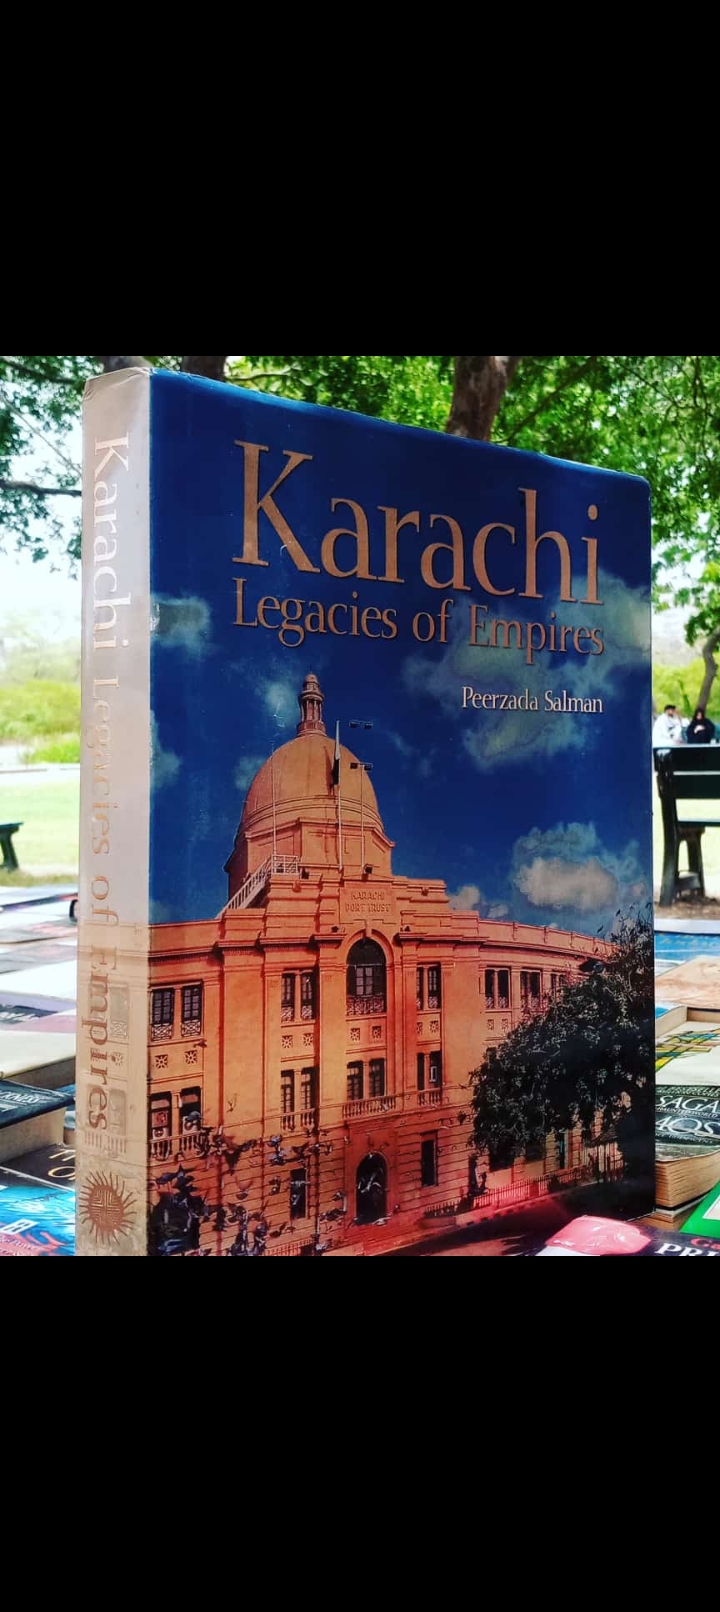 karachi legacies of empires by peerzada salman. new large size coffee table book